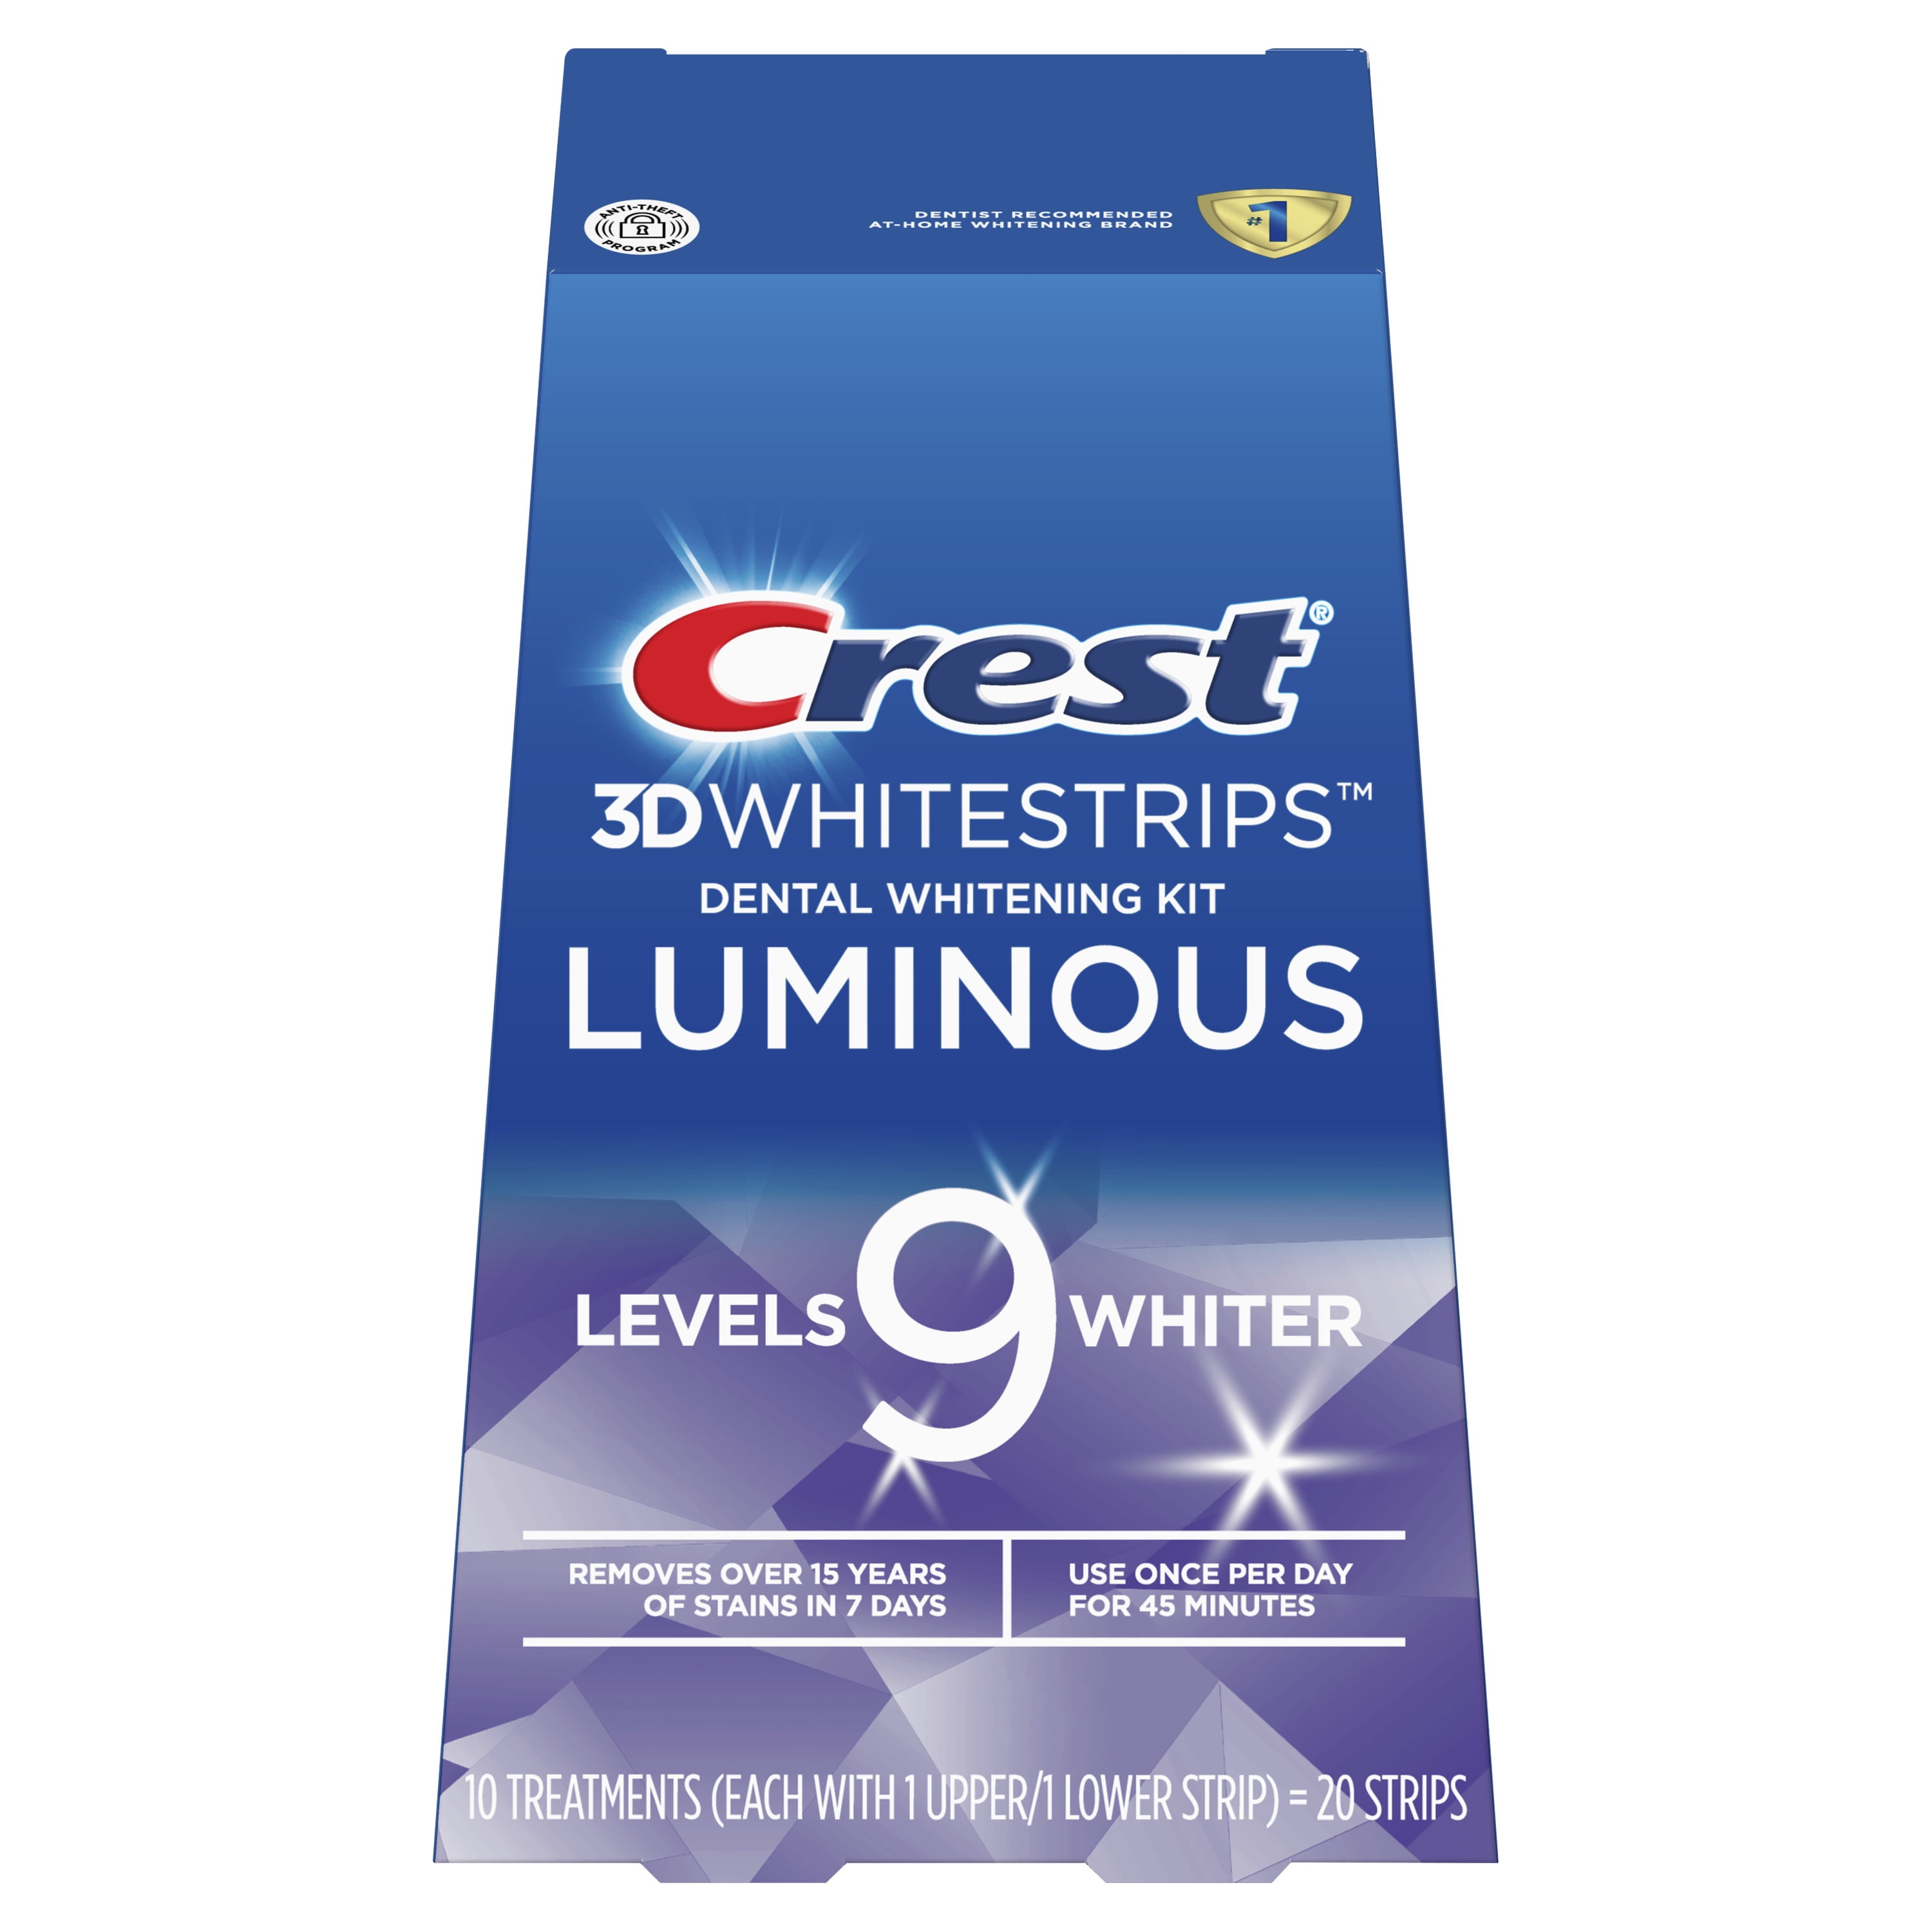 Crest 3DWhitestrips Luminous At-home Teeth Whitening Kit, 10 Treatments